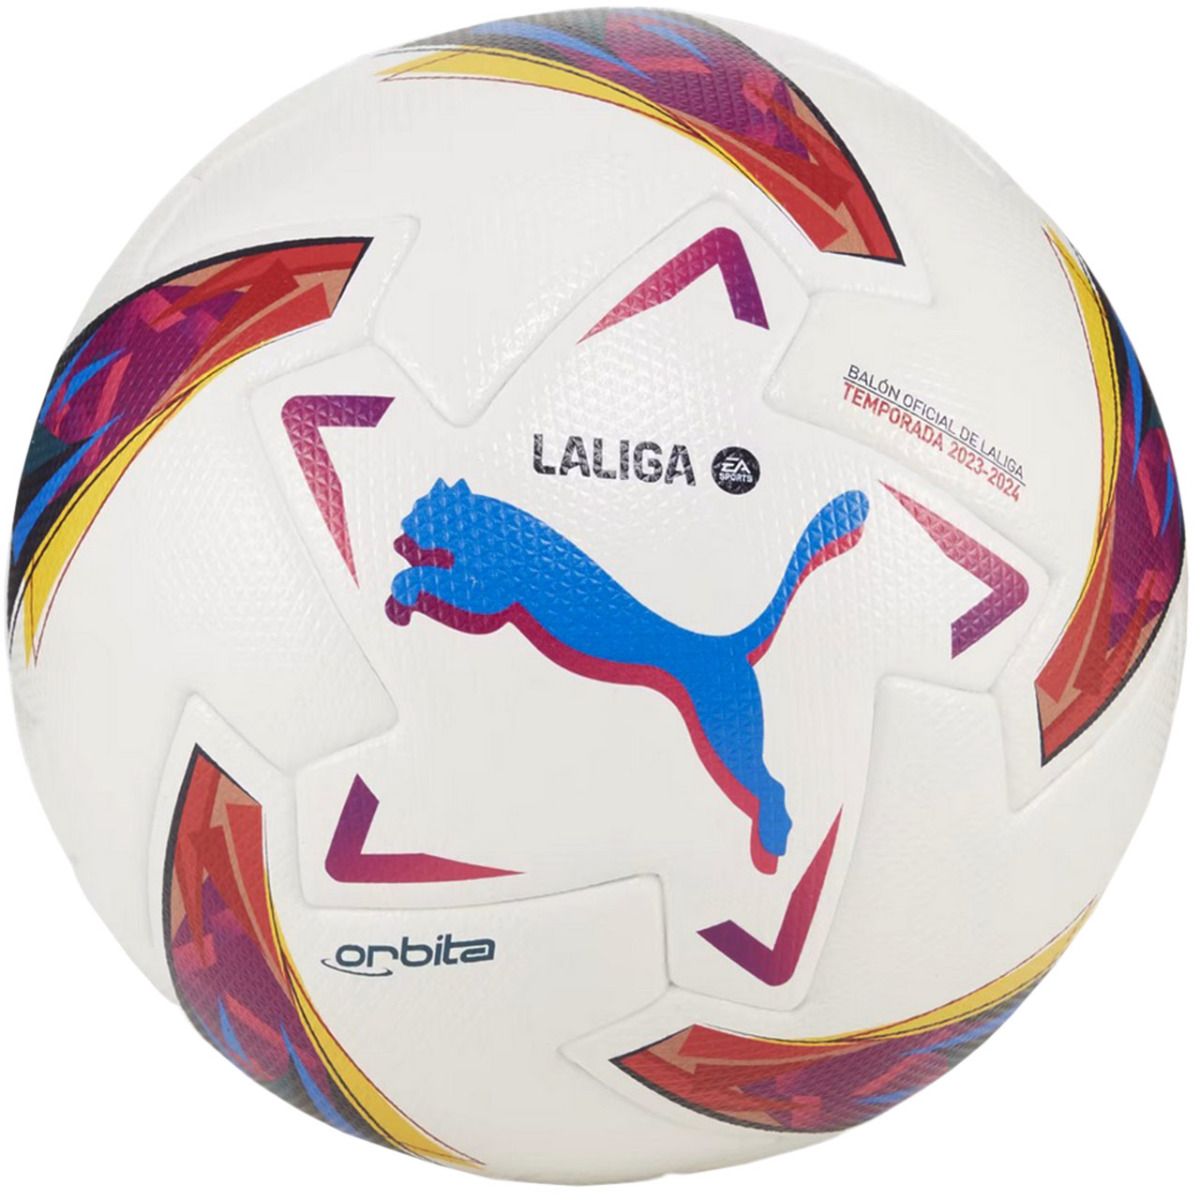 PUMA Fußball Orbita LaLiga 1 FIFA Quality 84106 01